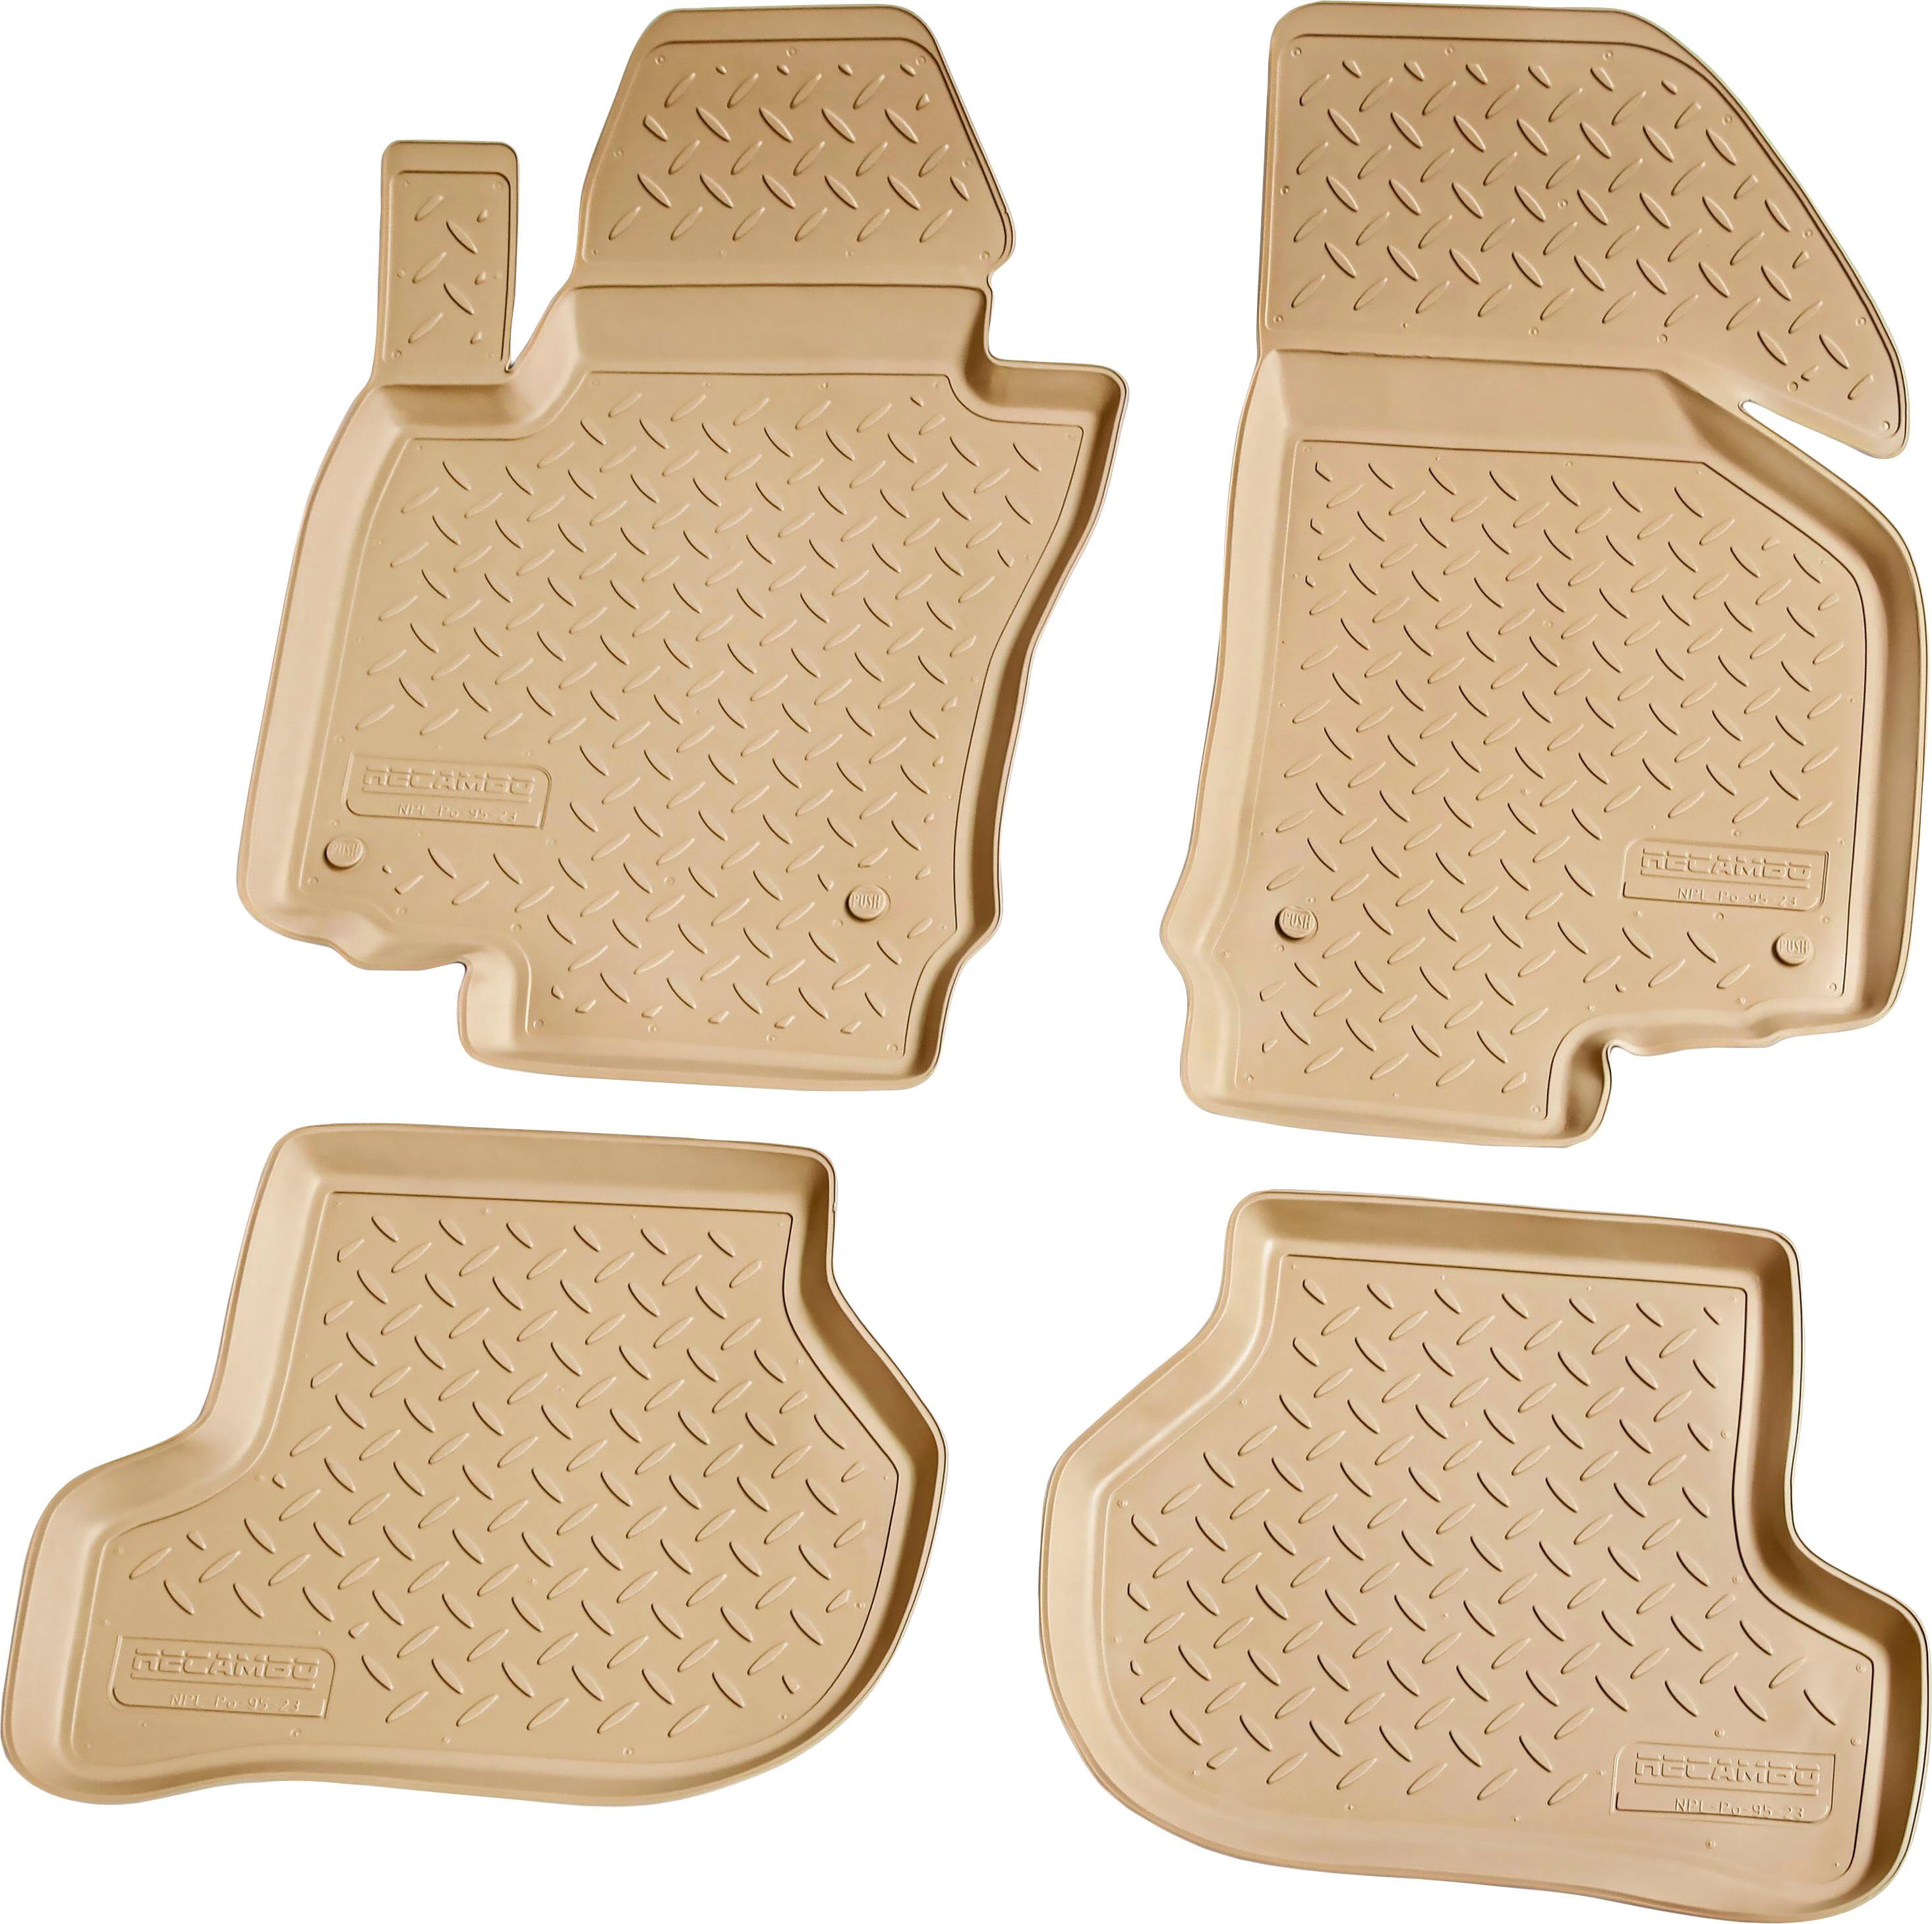 RECAMBO Passform-Fußmatten CustomComforts (4 St), für SEAT Leon, II 1P 2005 - 2012, perfekte Passform